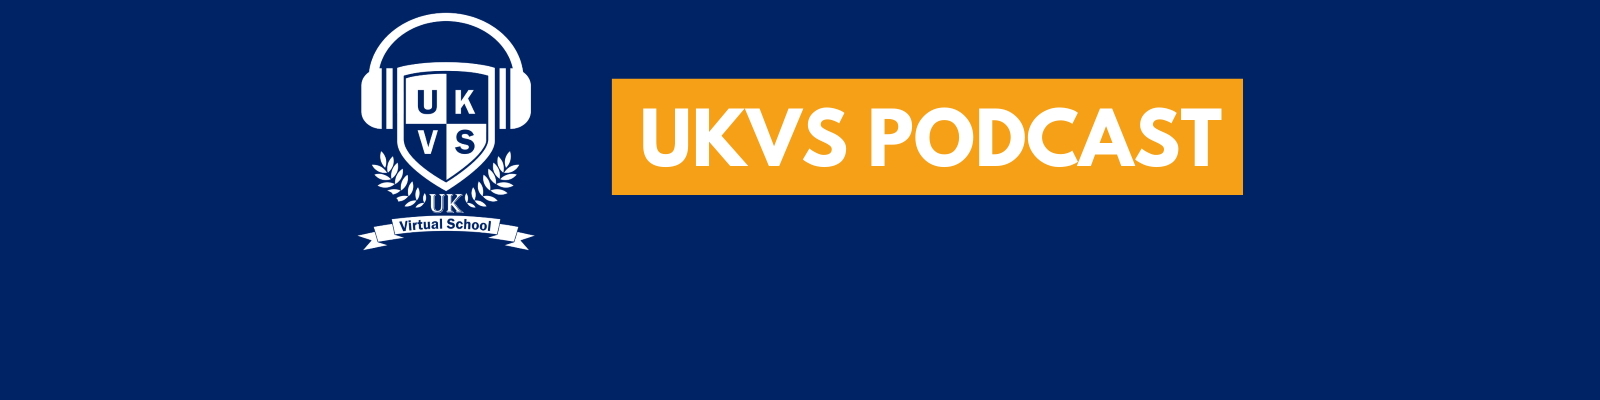 UK Virtual School Podcast - UKVS